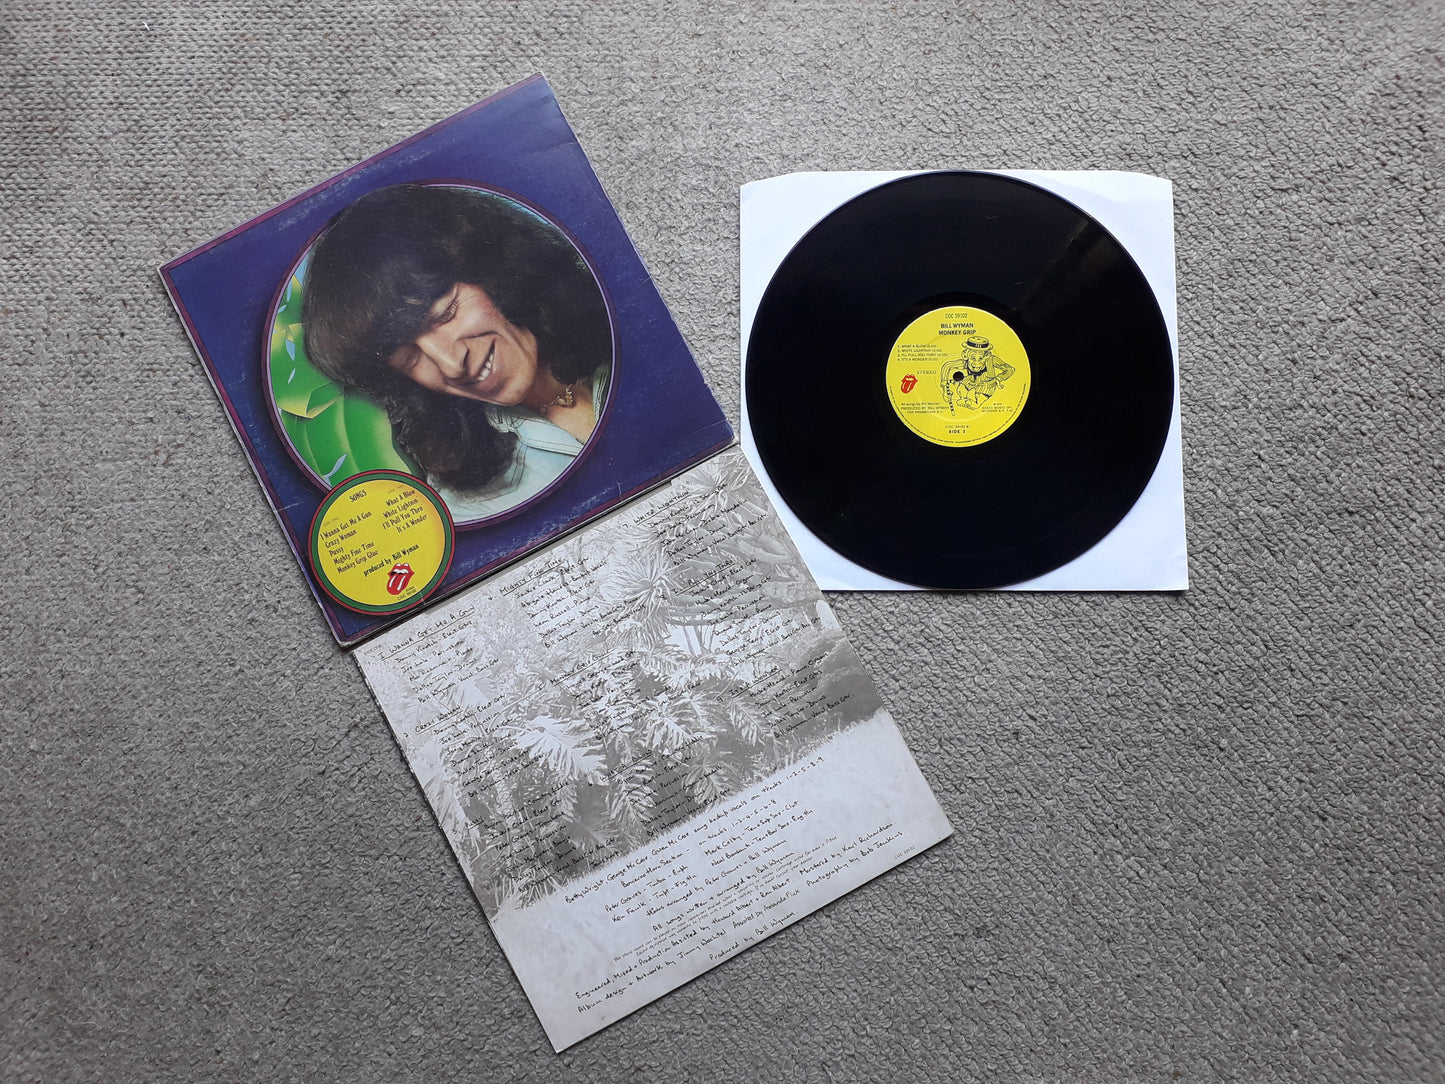 Bill Wyman-Monkey Grip LP (COC 59102)